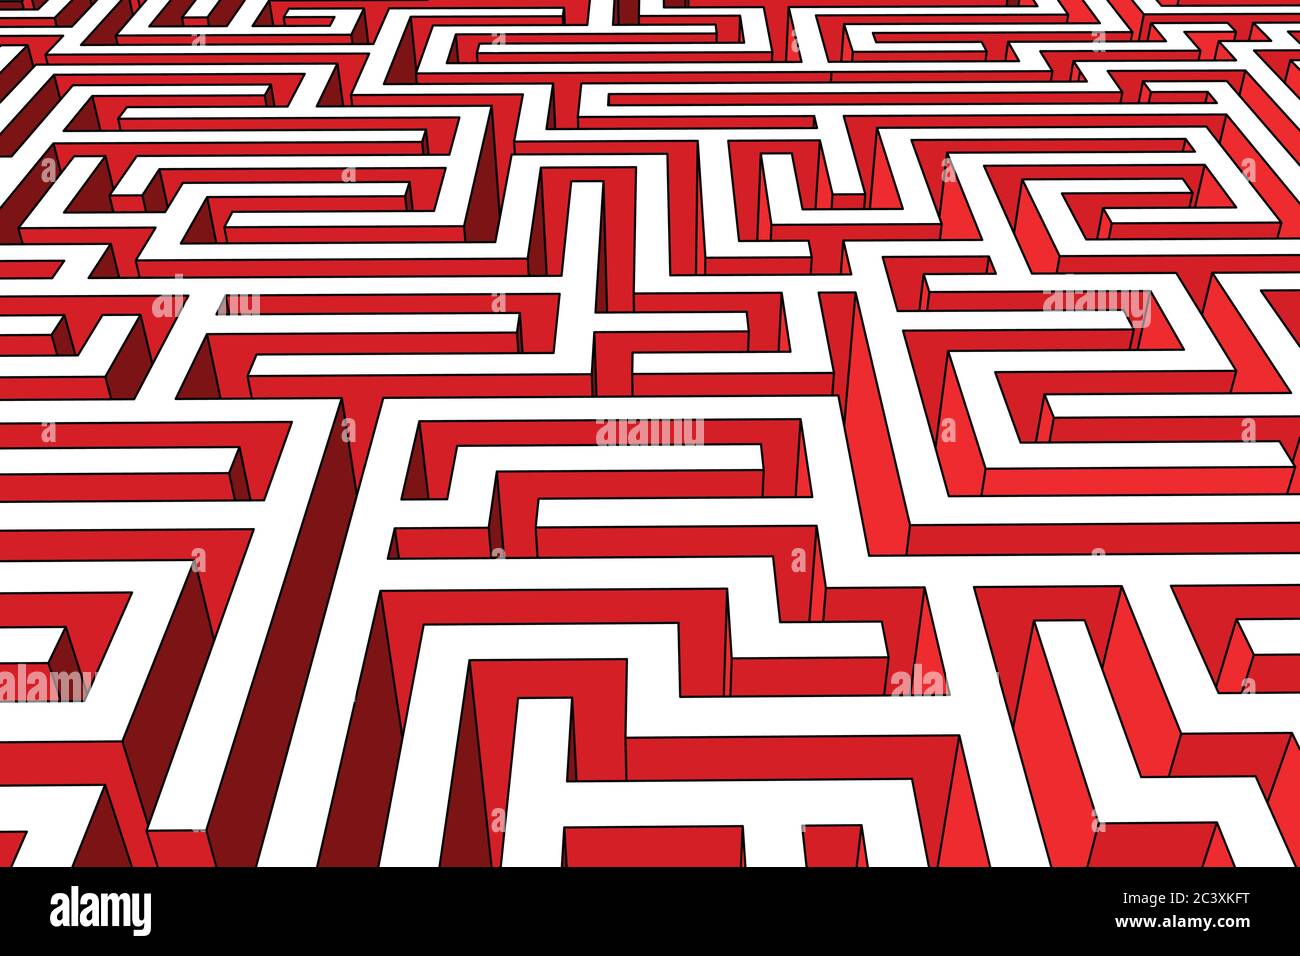 endless labyrinth of walls Stock Vector